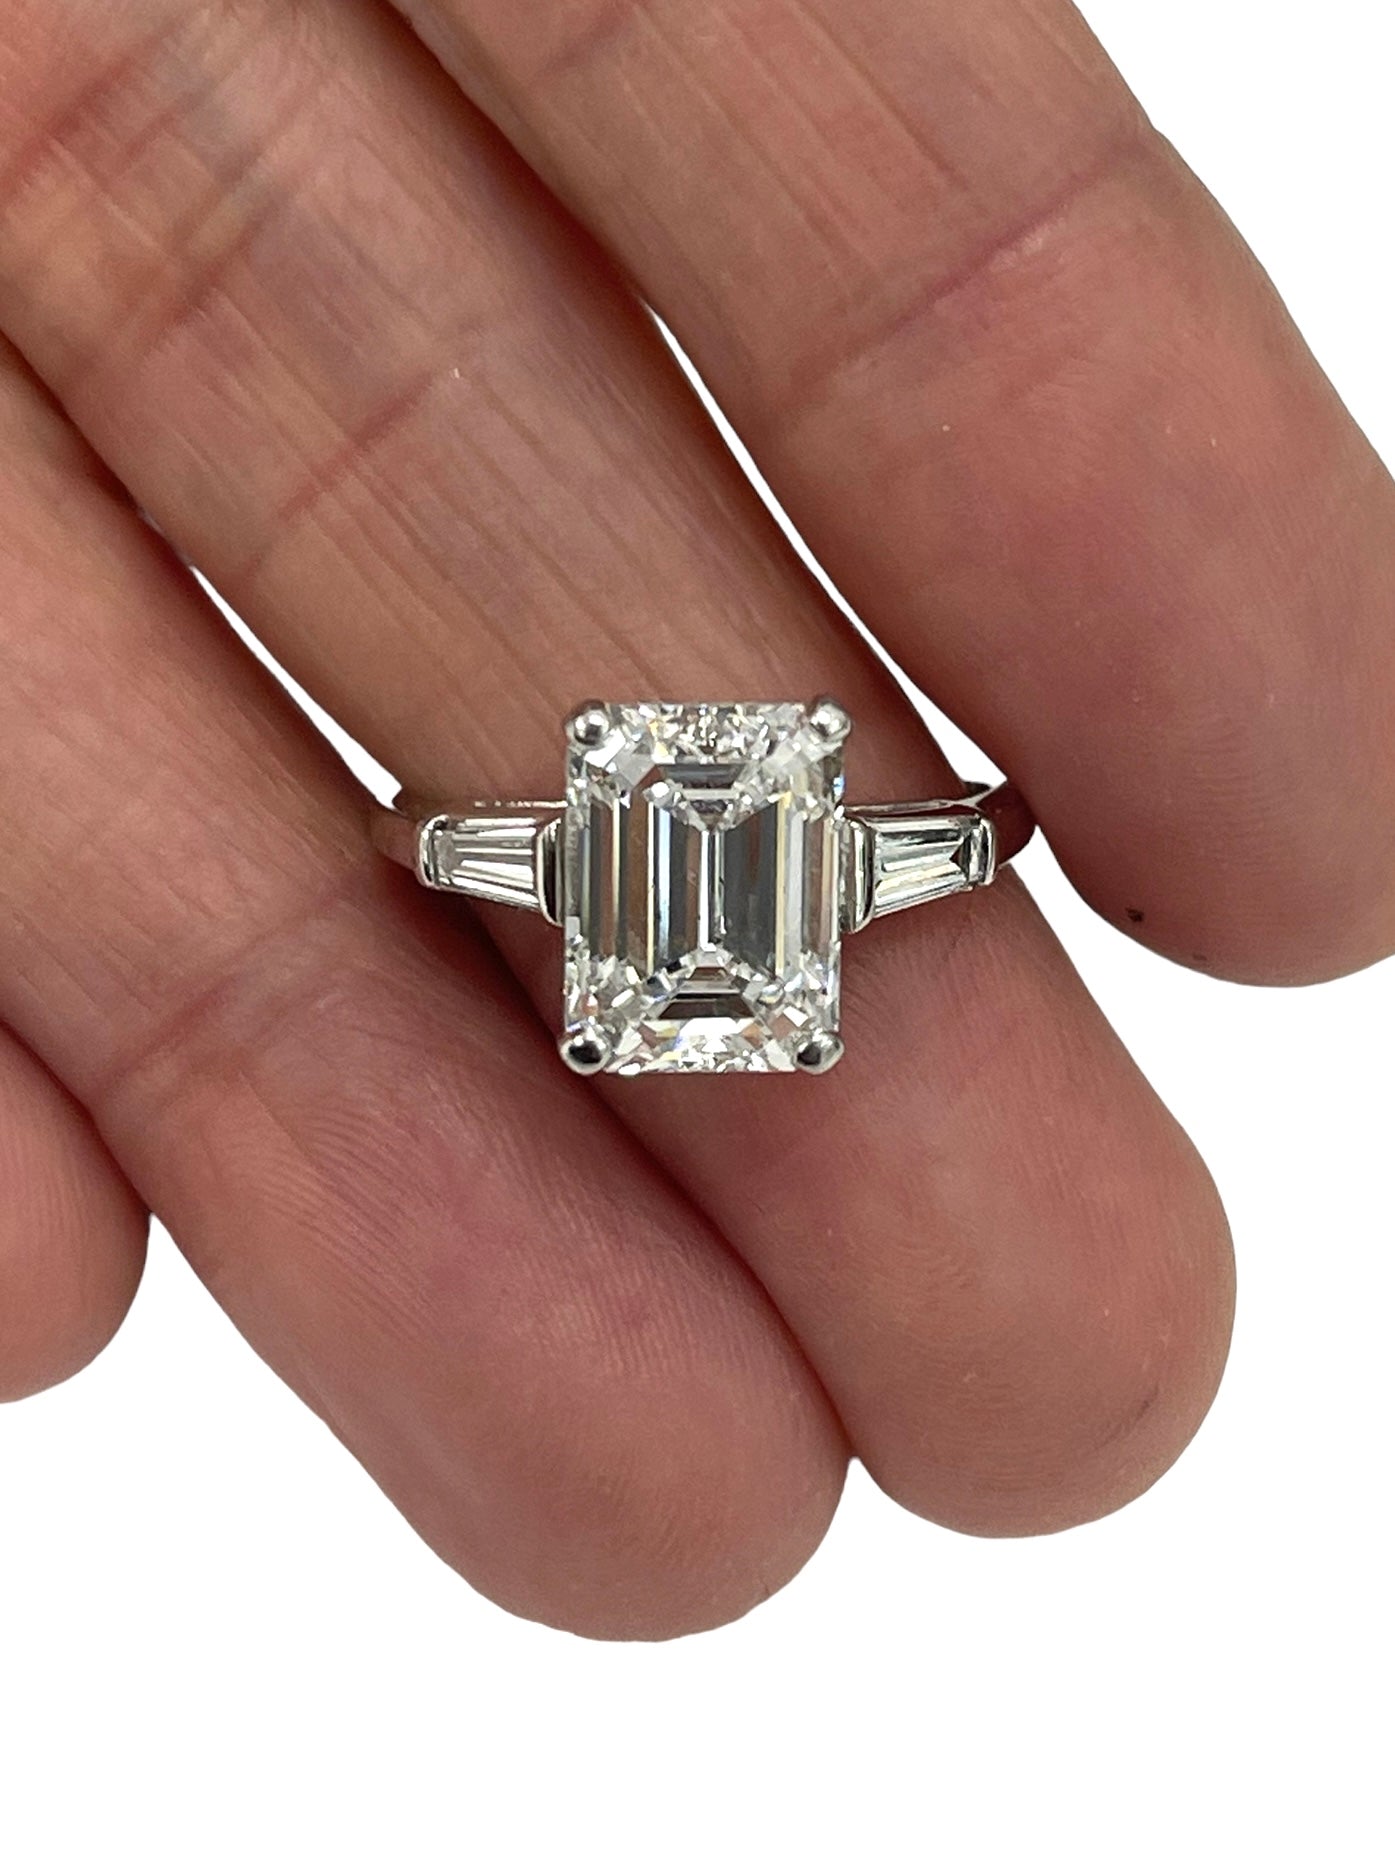 Emerald Cut Diamond Engagement Ring GIA Certified 3.01 Carats